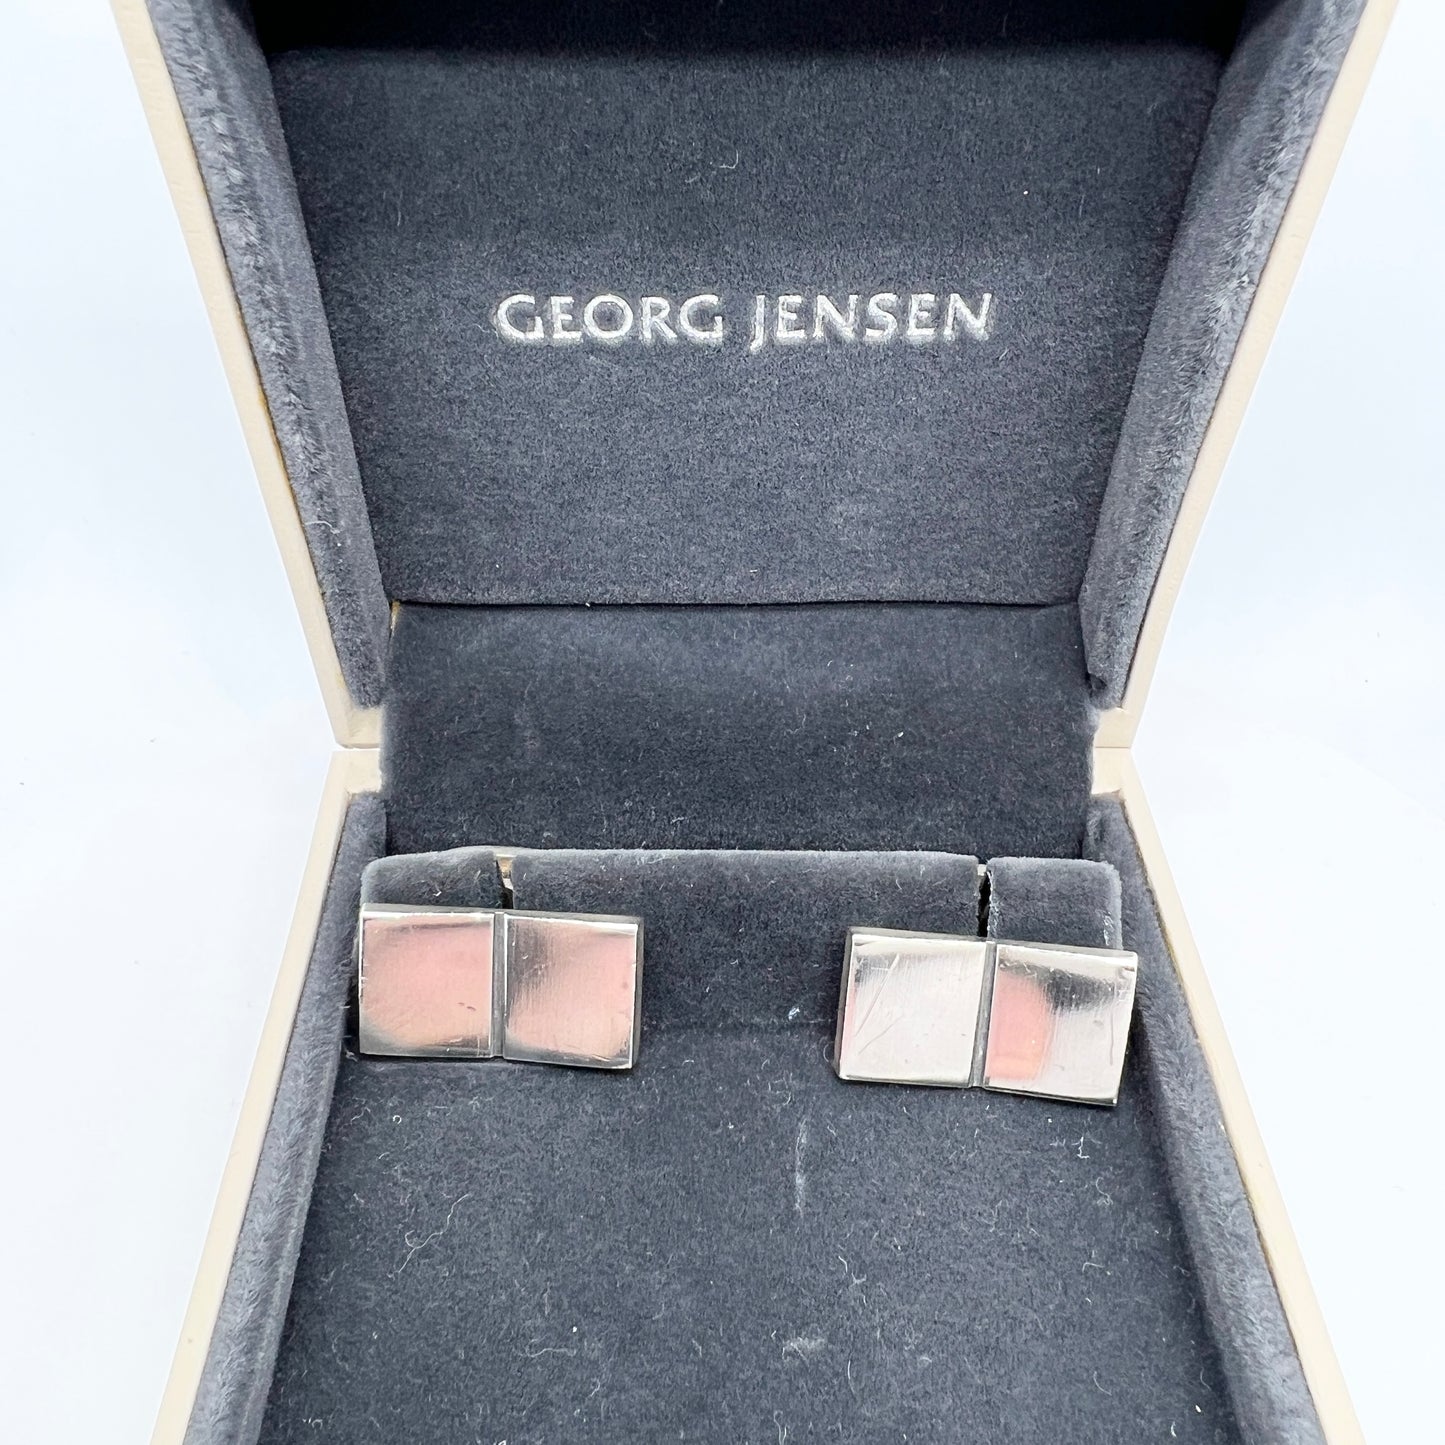 Georg Jensen, Denmark. Vintage Sterling Silver Cufflinks. Design 109 by Nanna Ditzel